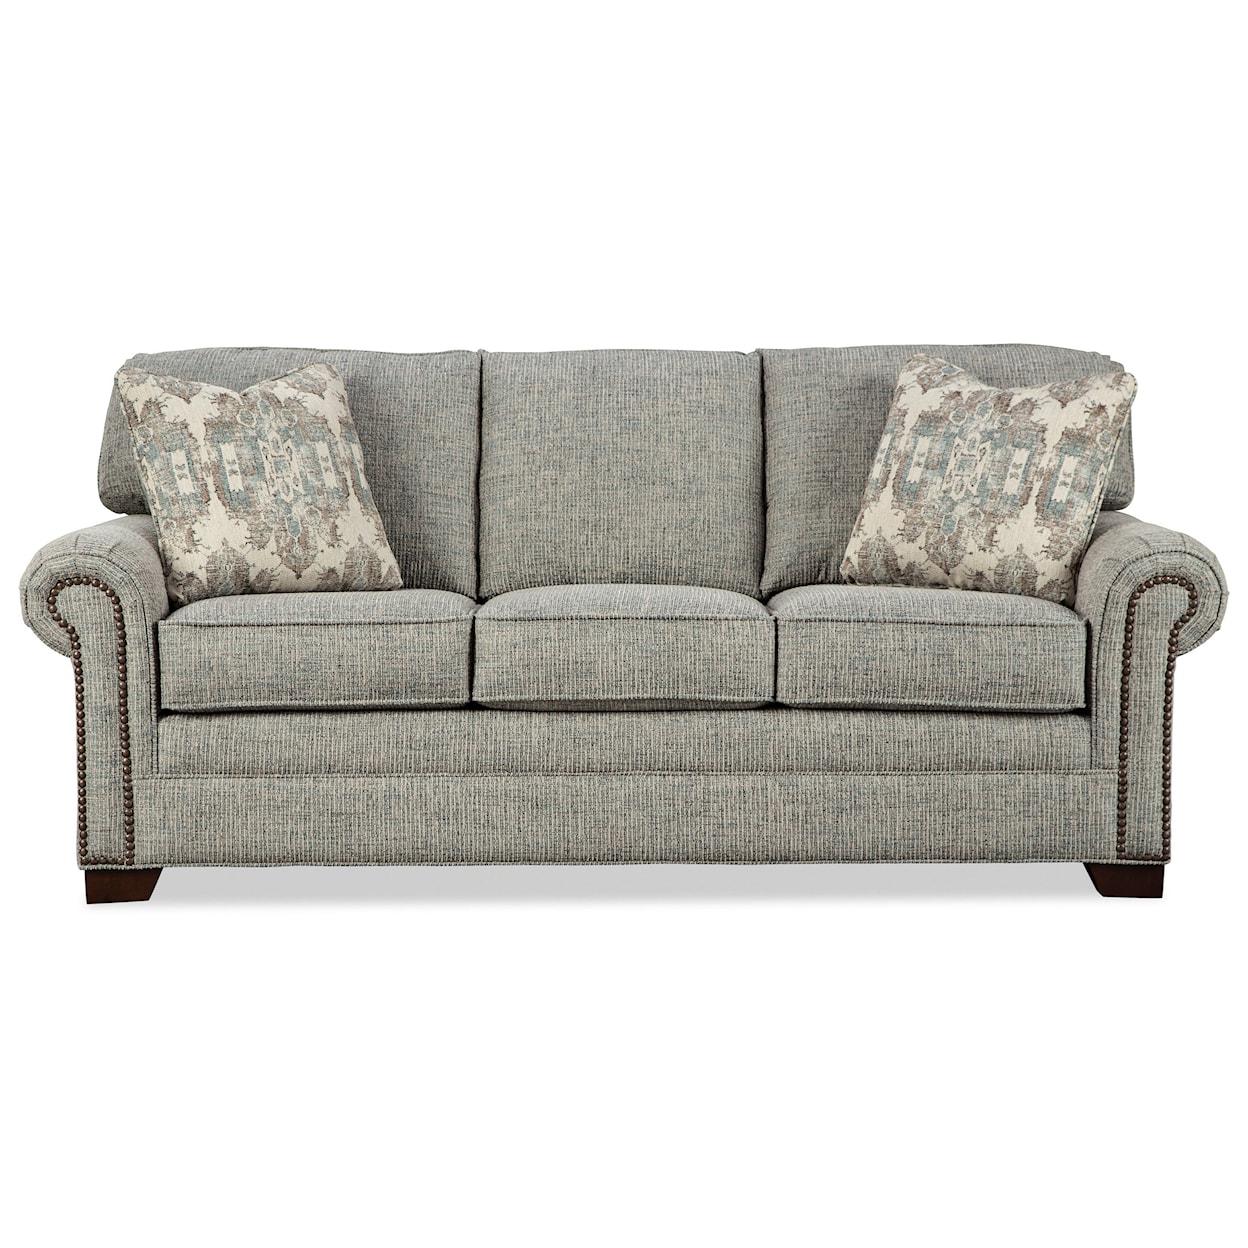 Hickory Craft 7565 Queen Sleeper Sofa with Memory Foam Mattress